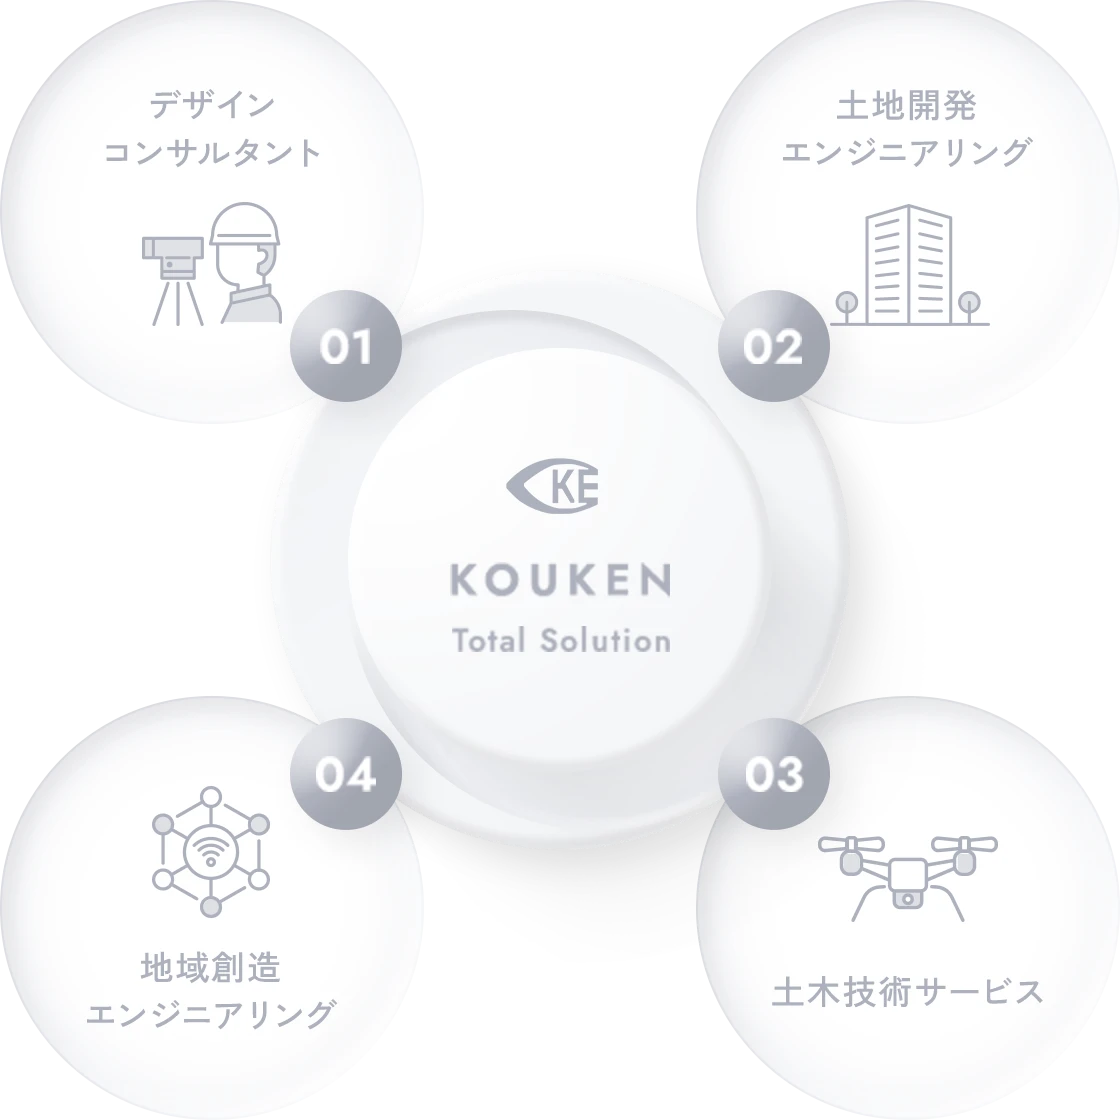 KOUKEN Total Solution デザインコンサルタント 土地開発エンジニアリング 地域創造エンジニアリング 土木技術サービス